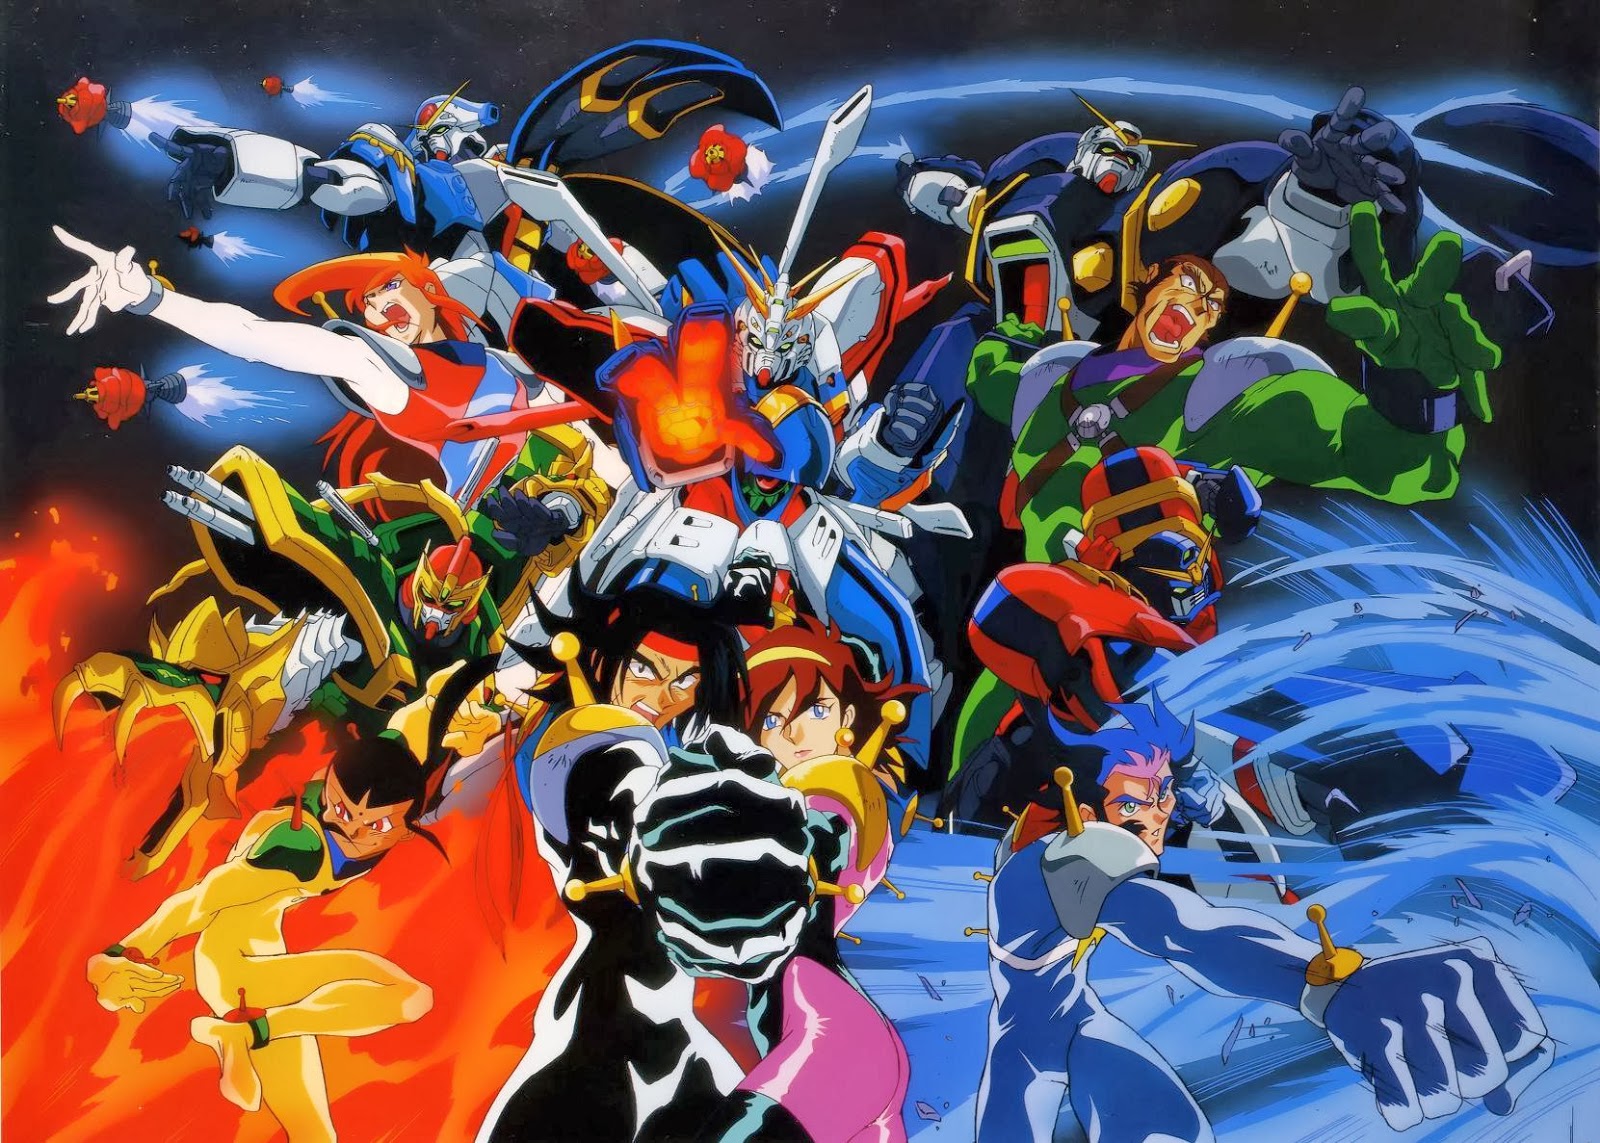 The cast of Mobile Fighter G Gundam